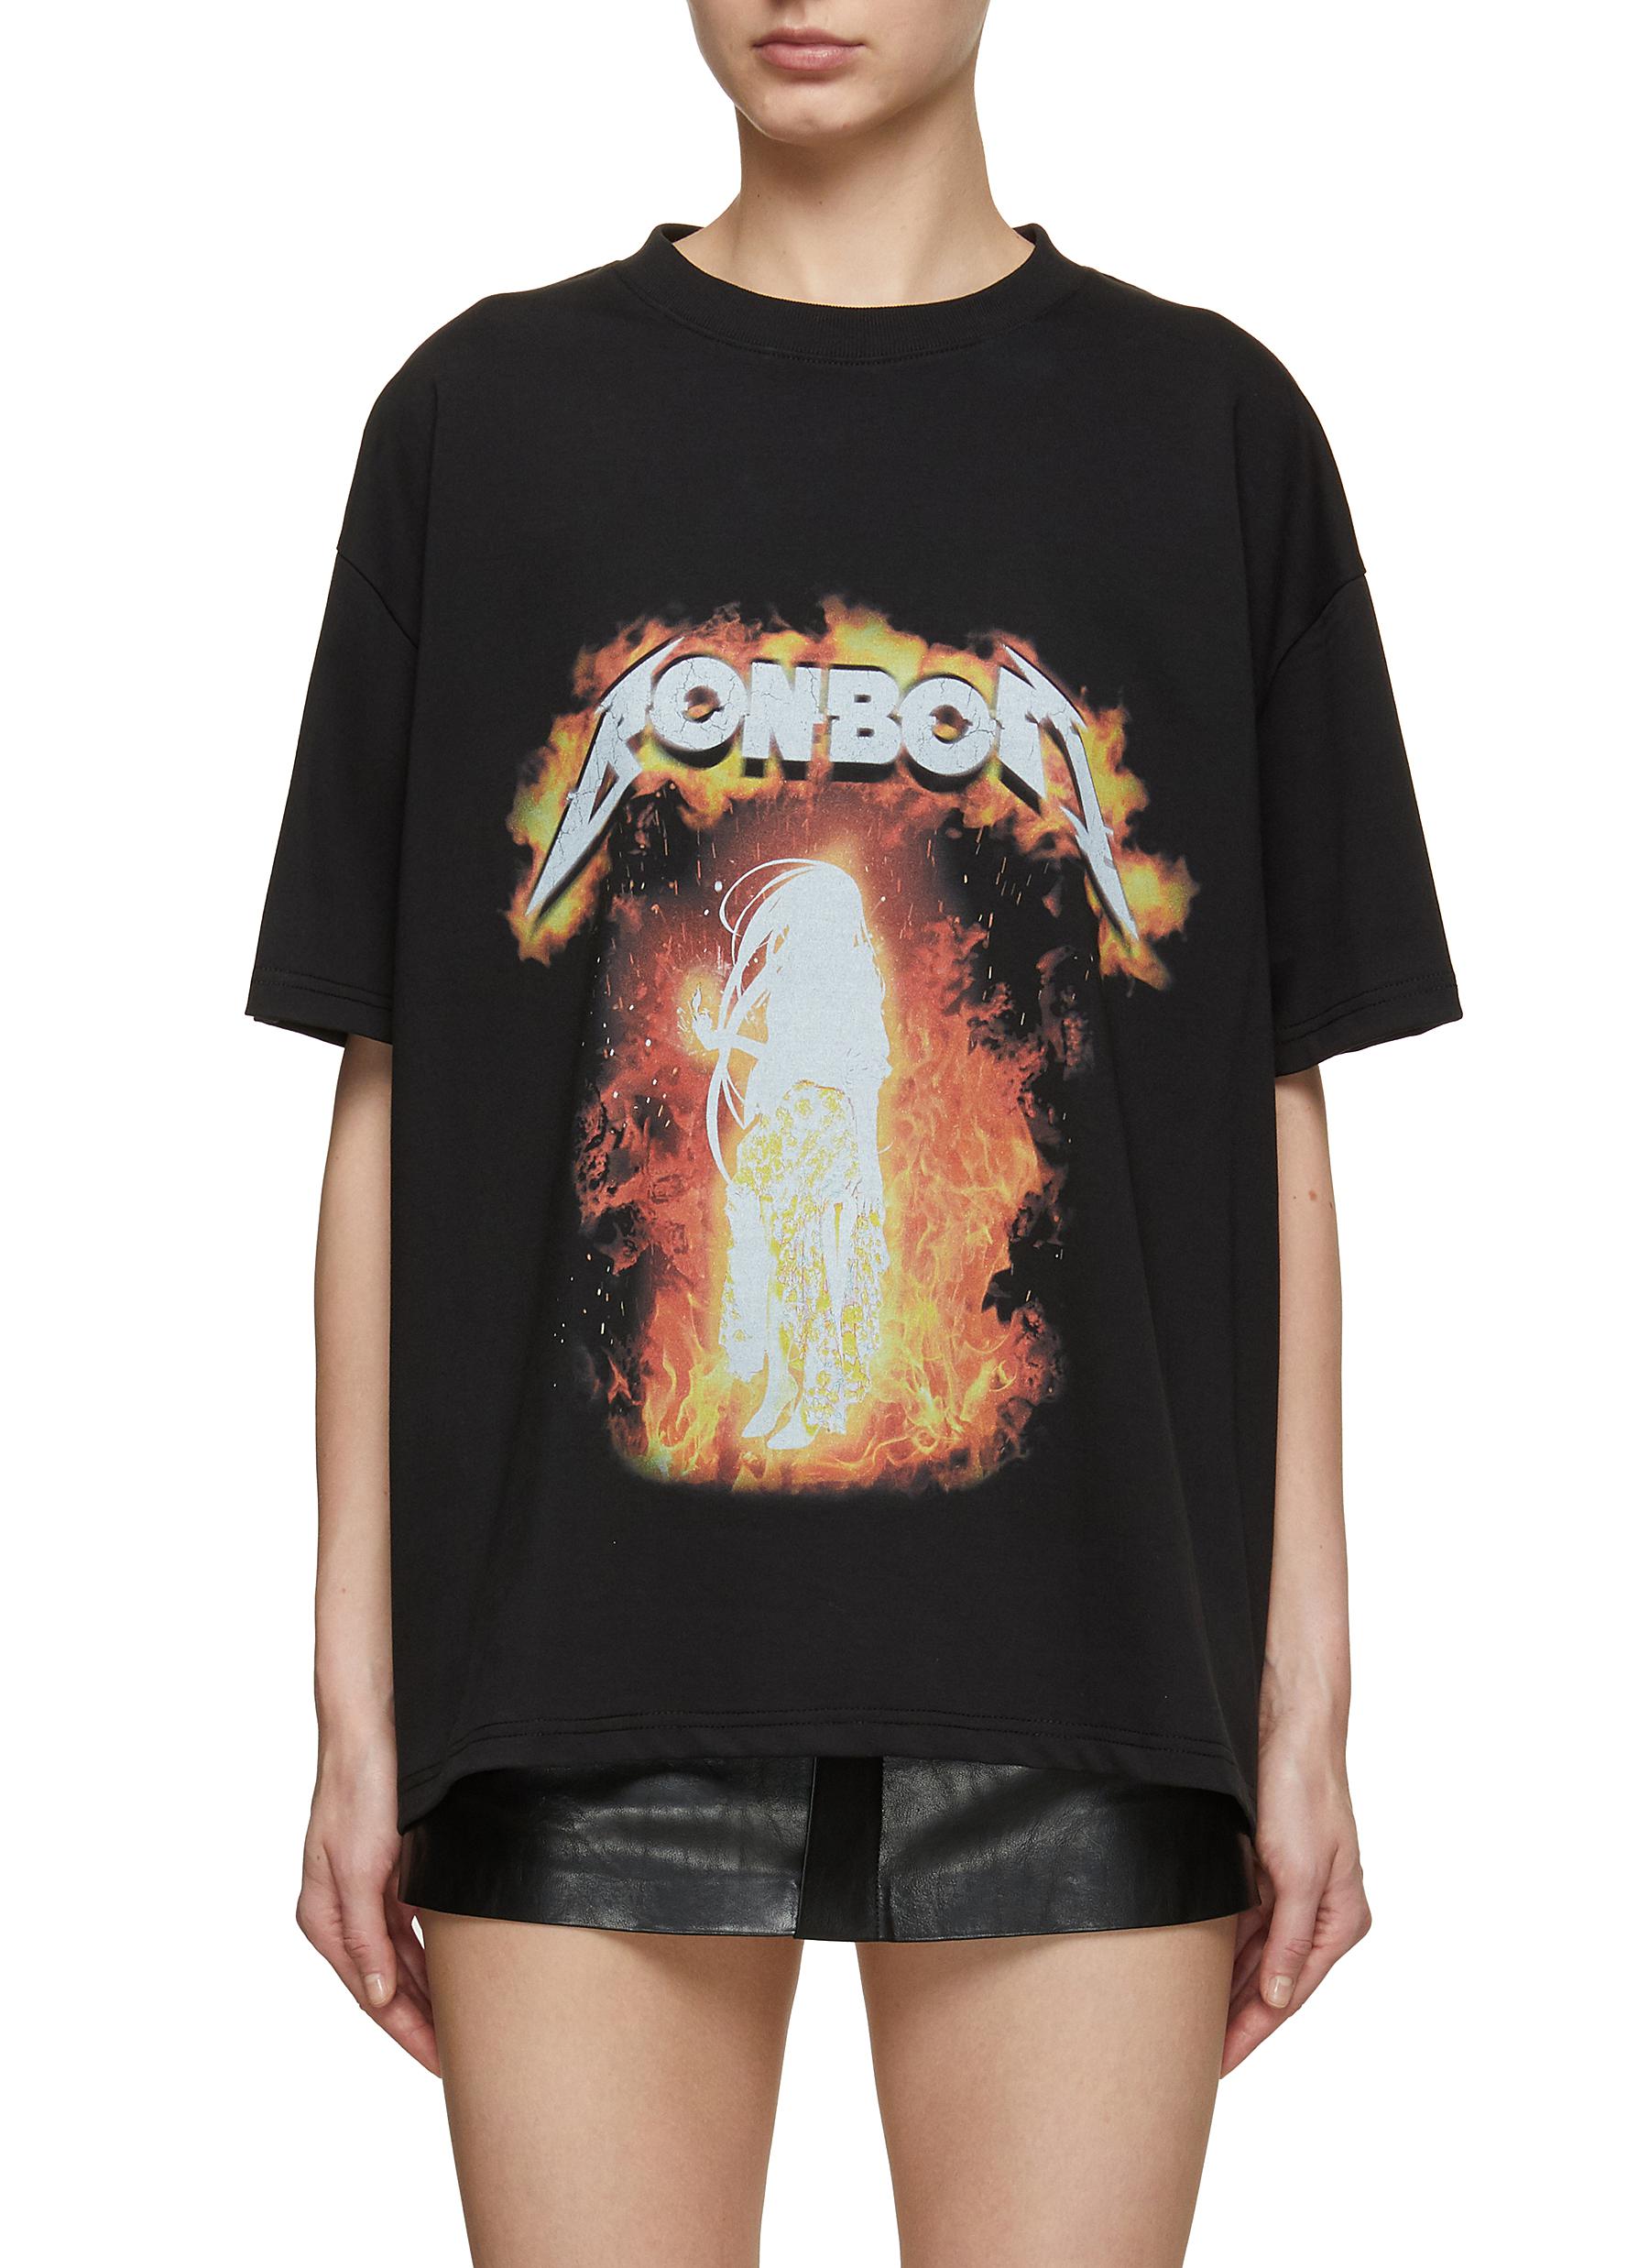 BONBOM | Goddess Of Fire Printed Cotton T-Shirt | Women | Lane